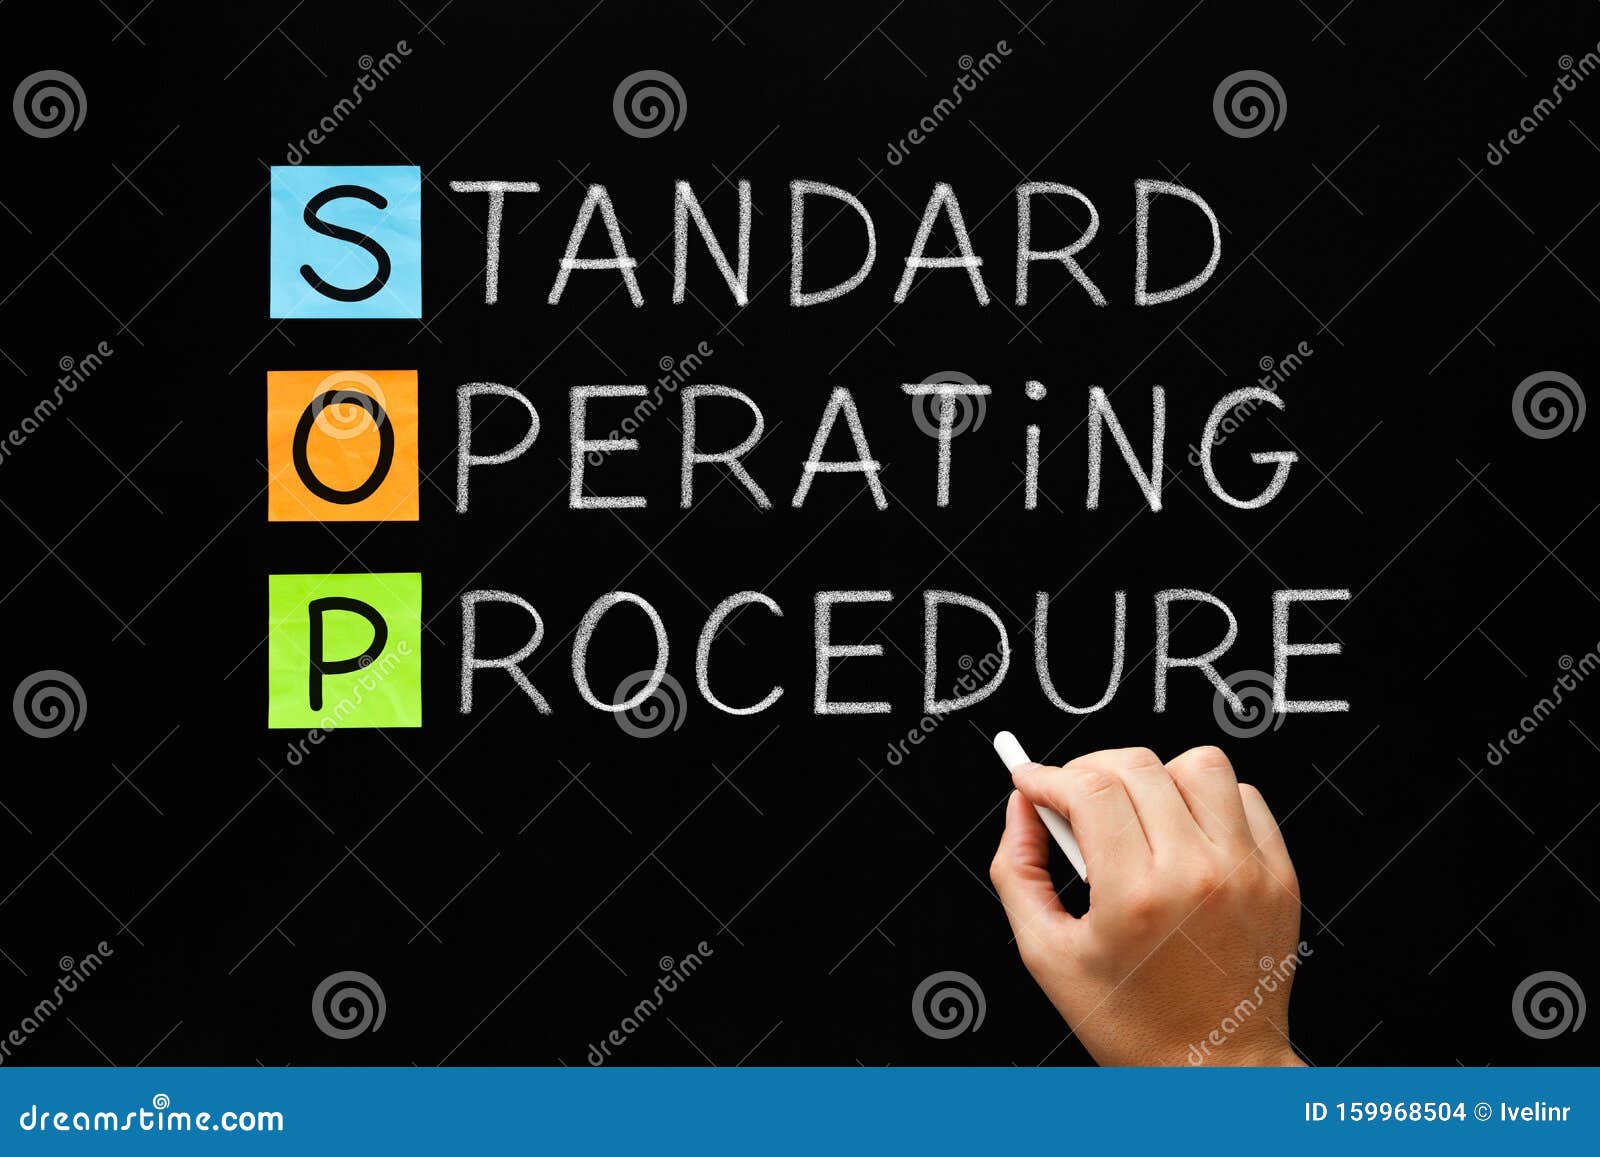 sop standard operating procedure concept